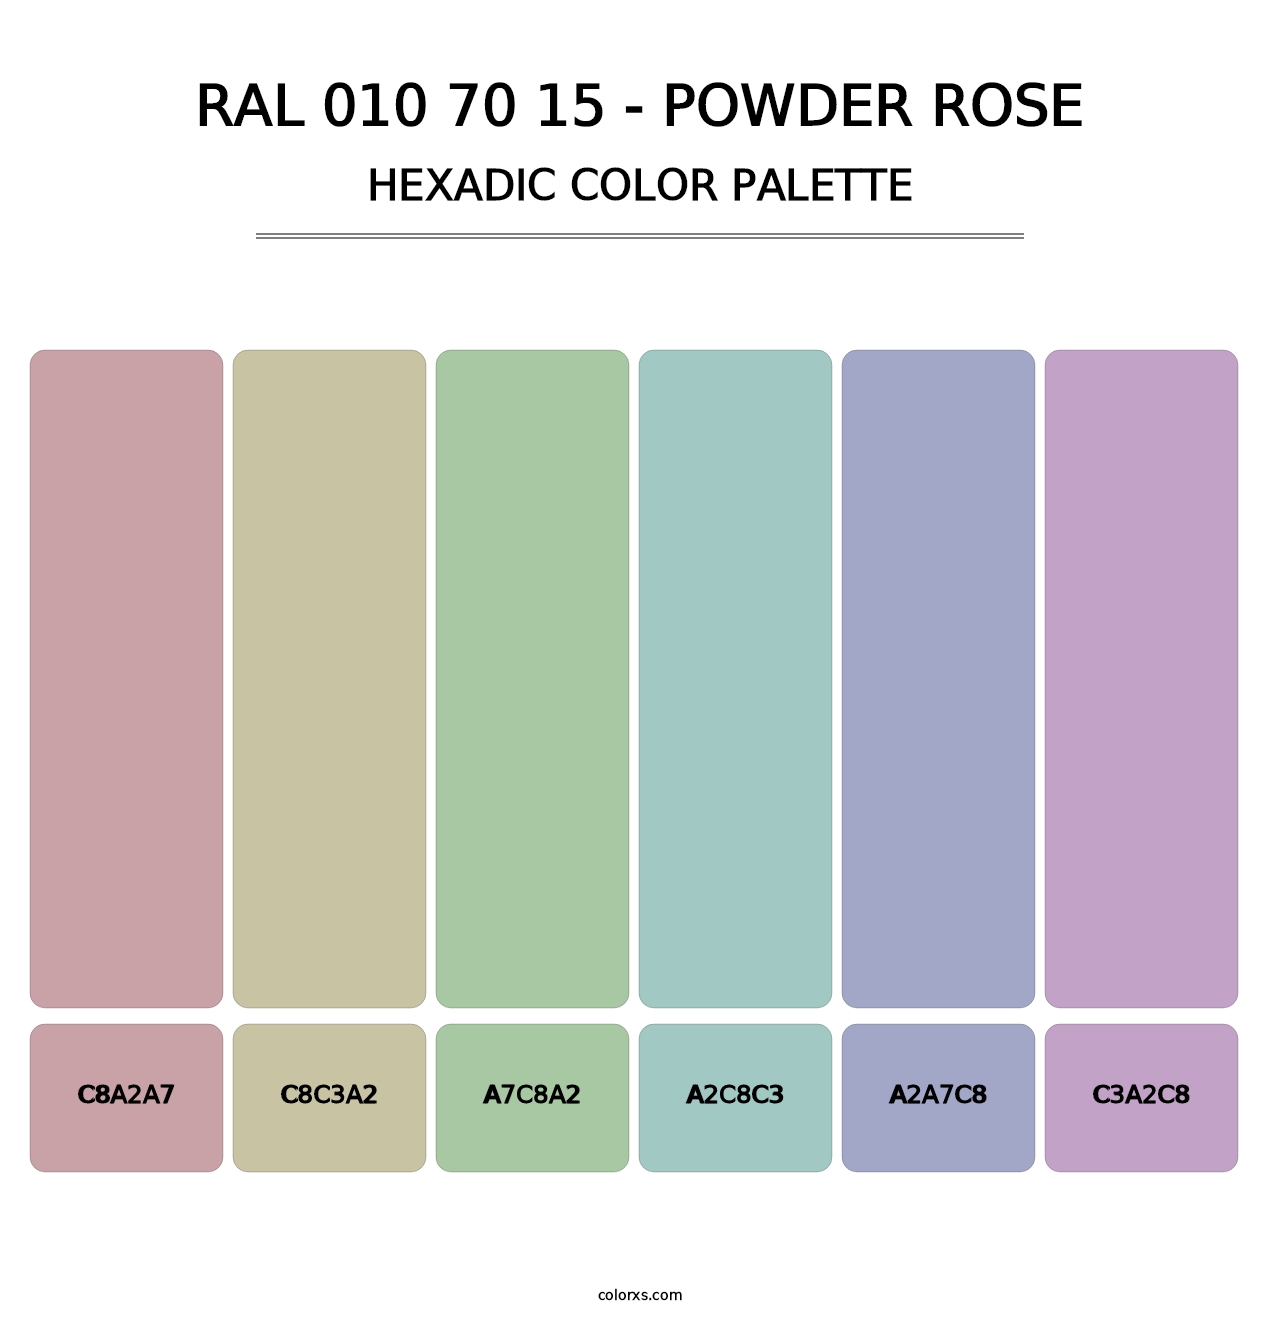 RAL 010 70 15 - Powder Rose - Hexadic Color Palette